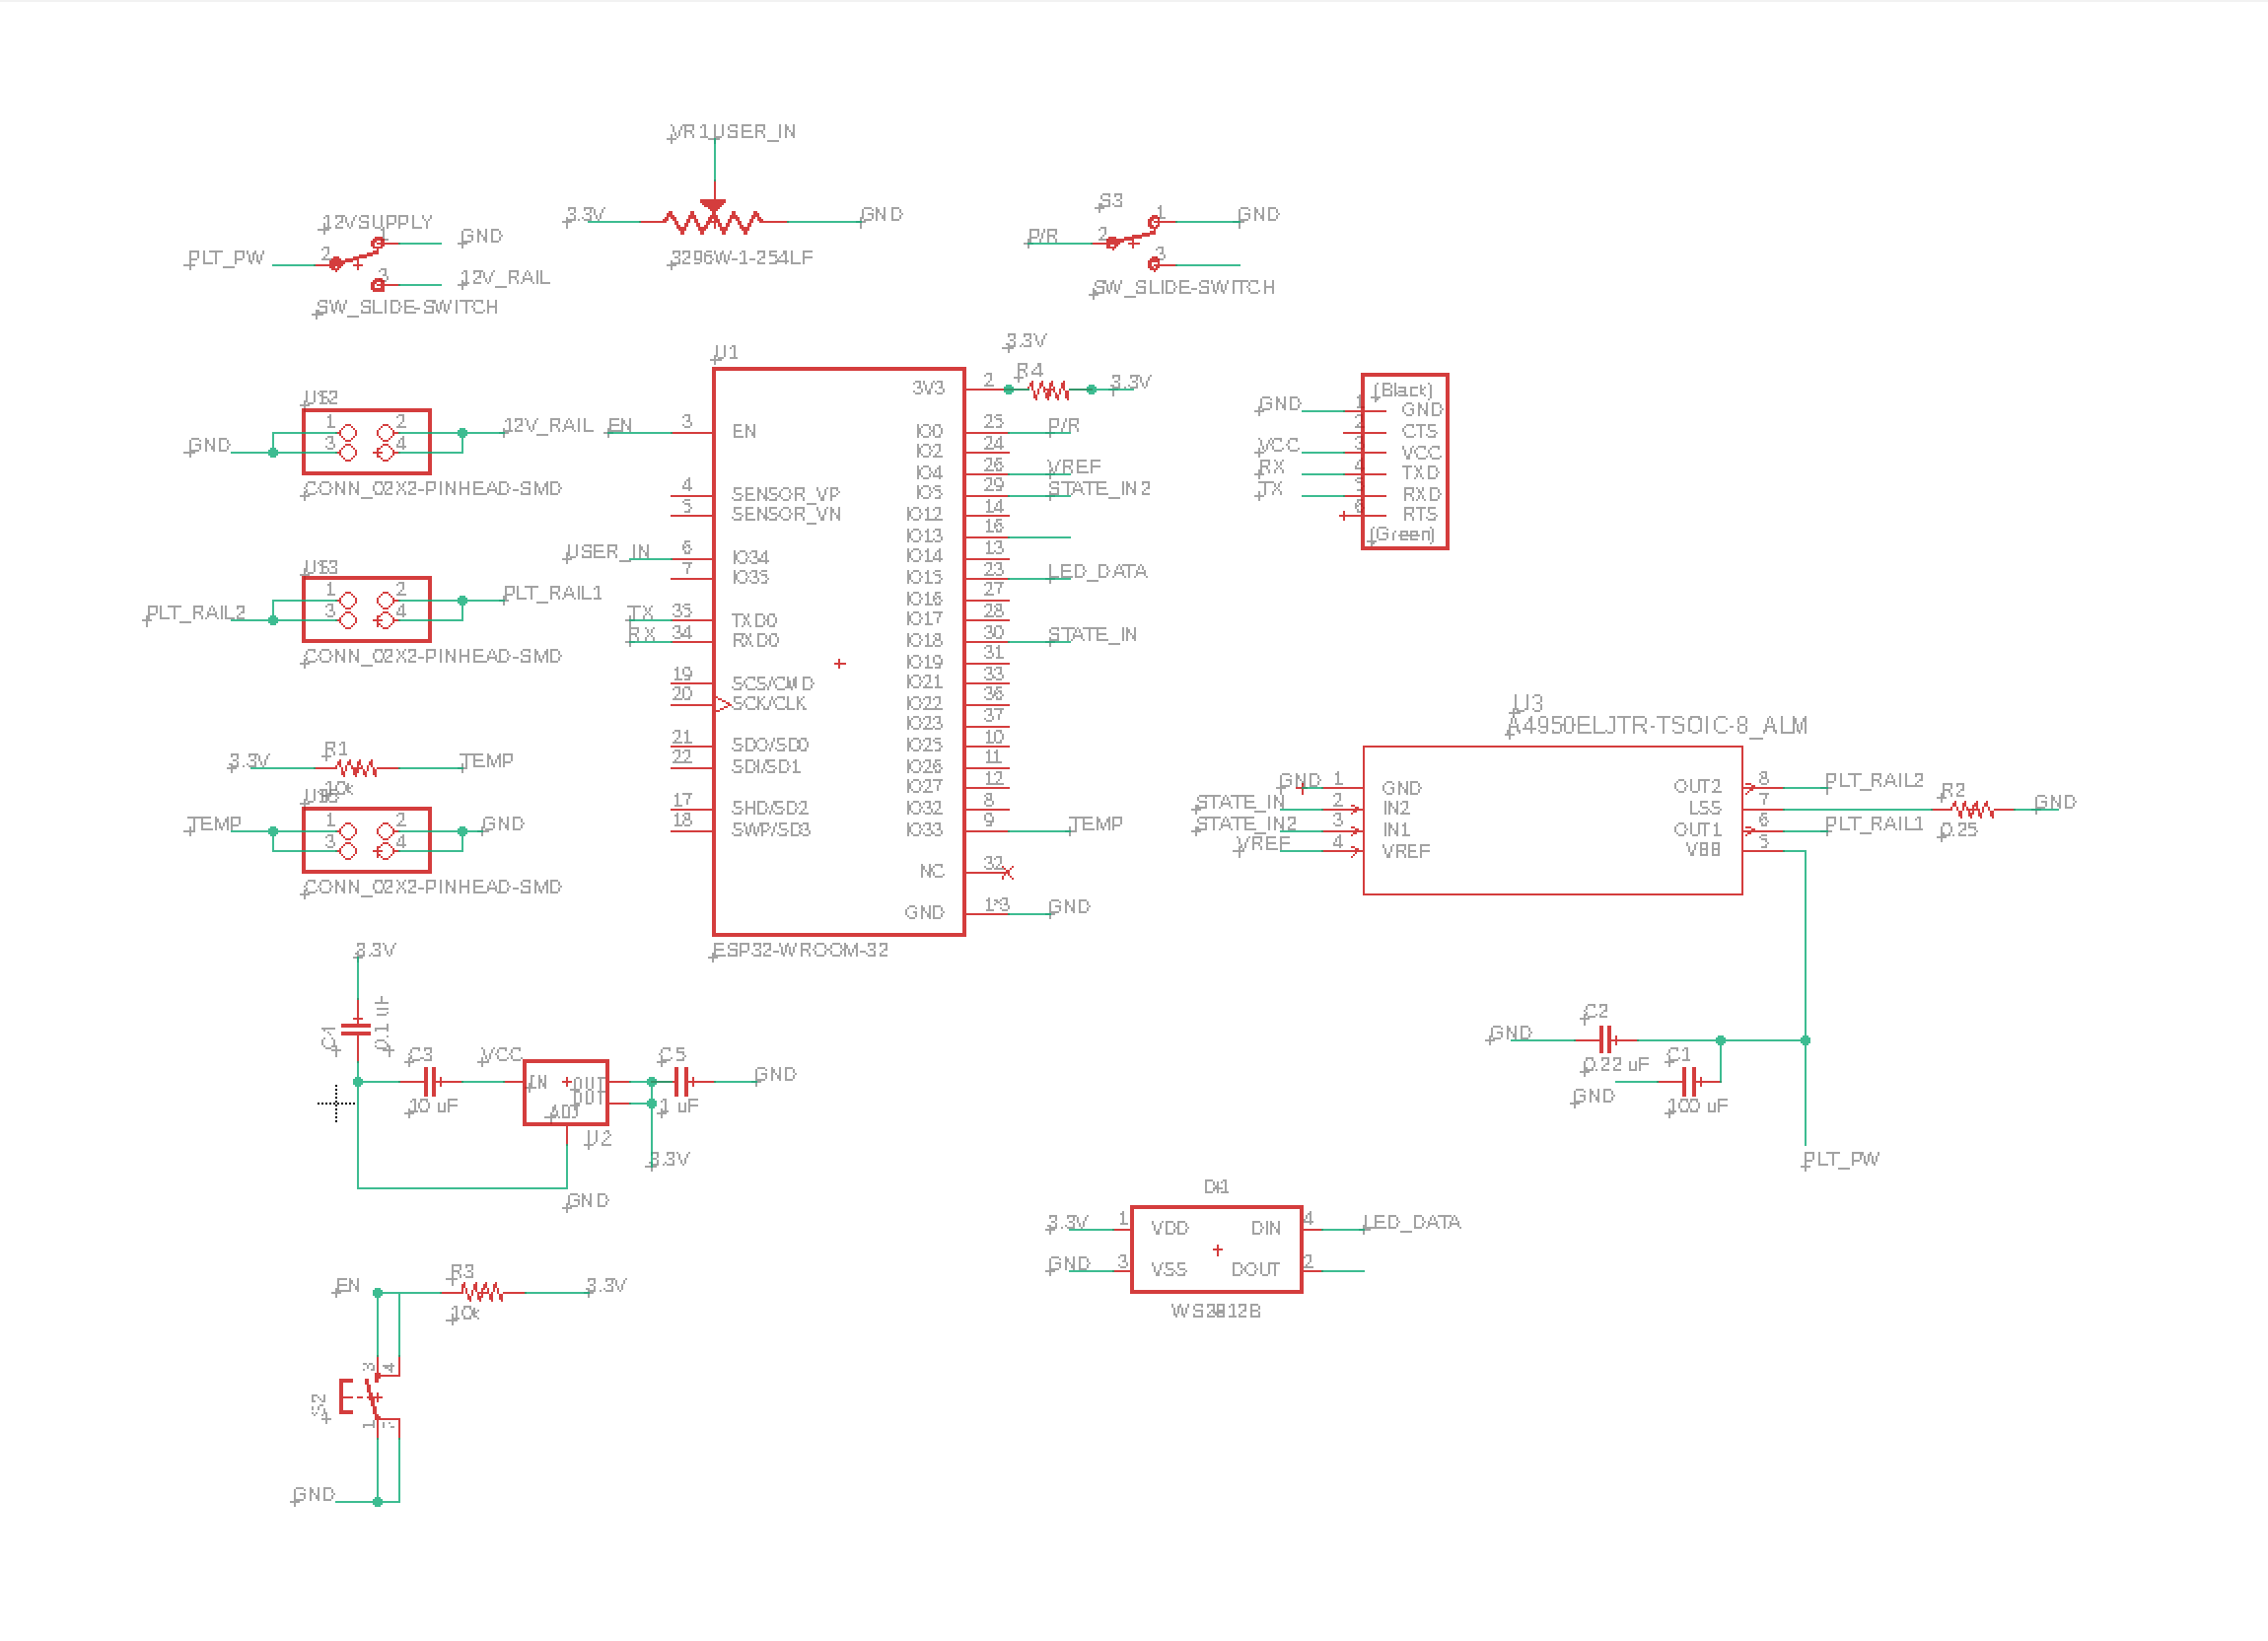 PCB schematic